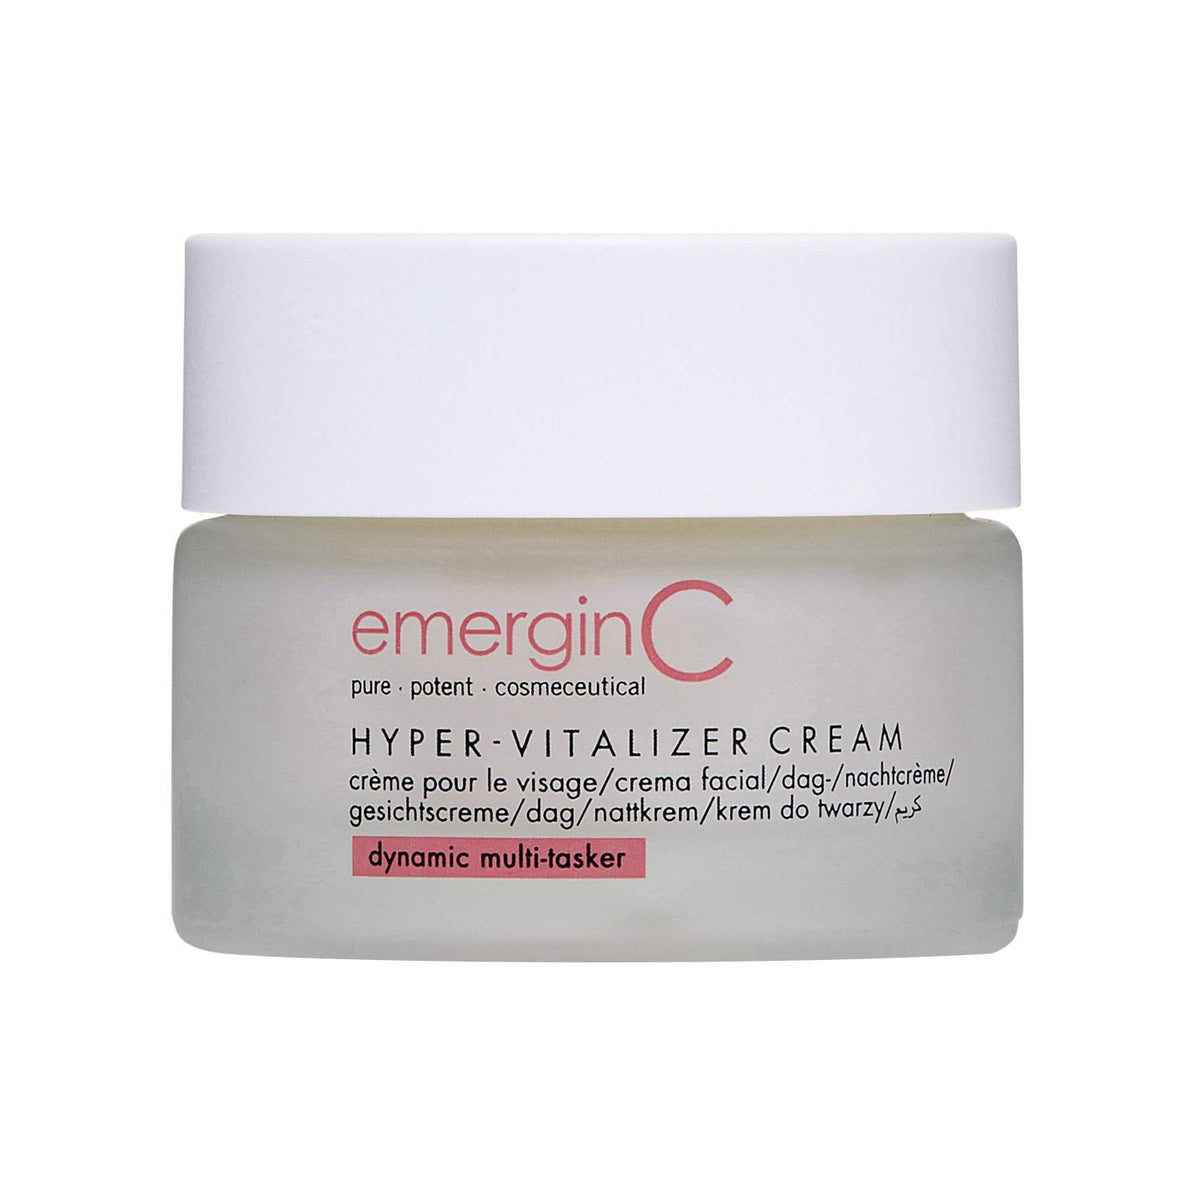 Hyper-Vitalizer Cream